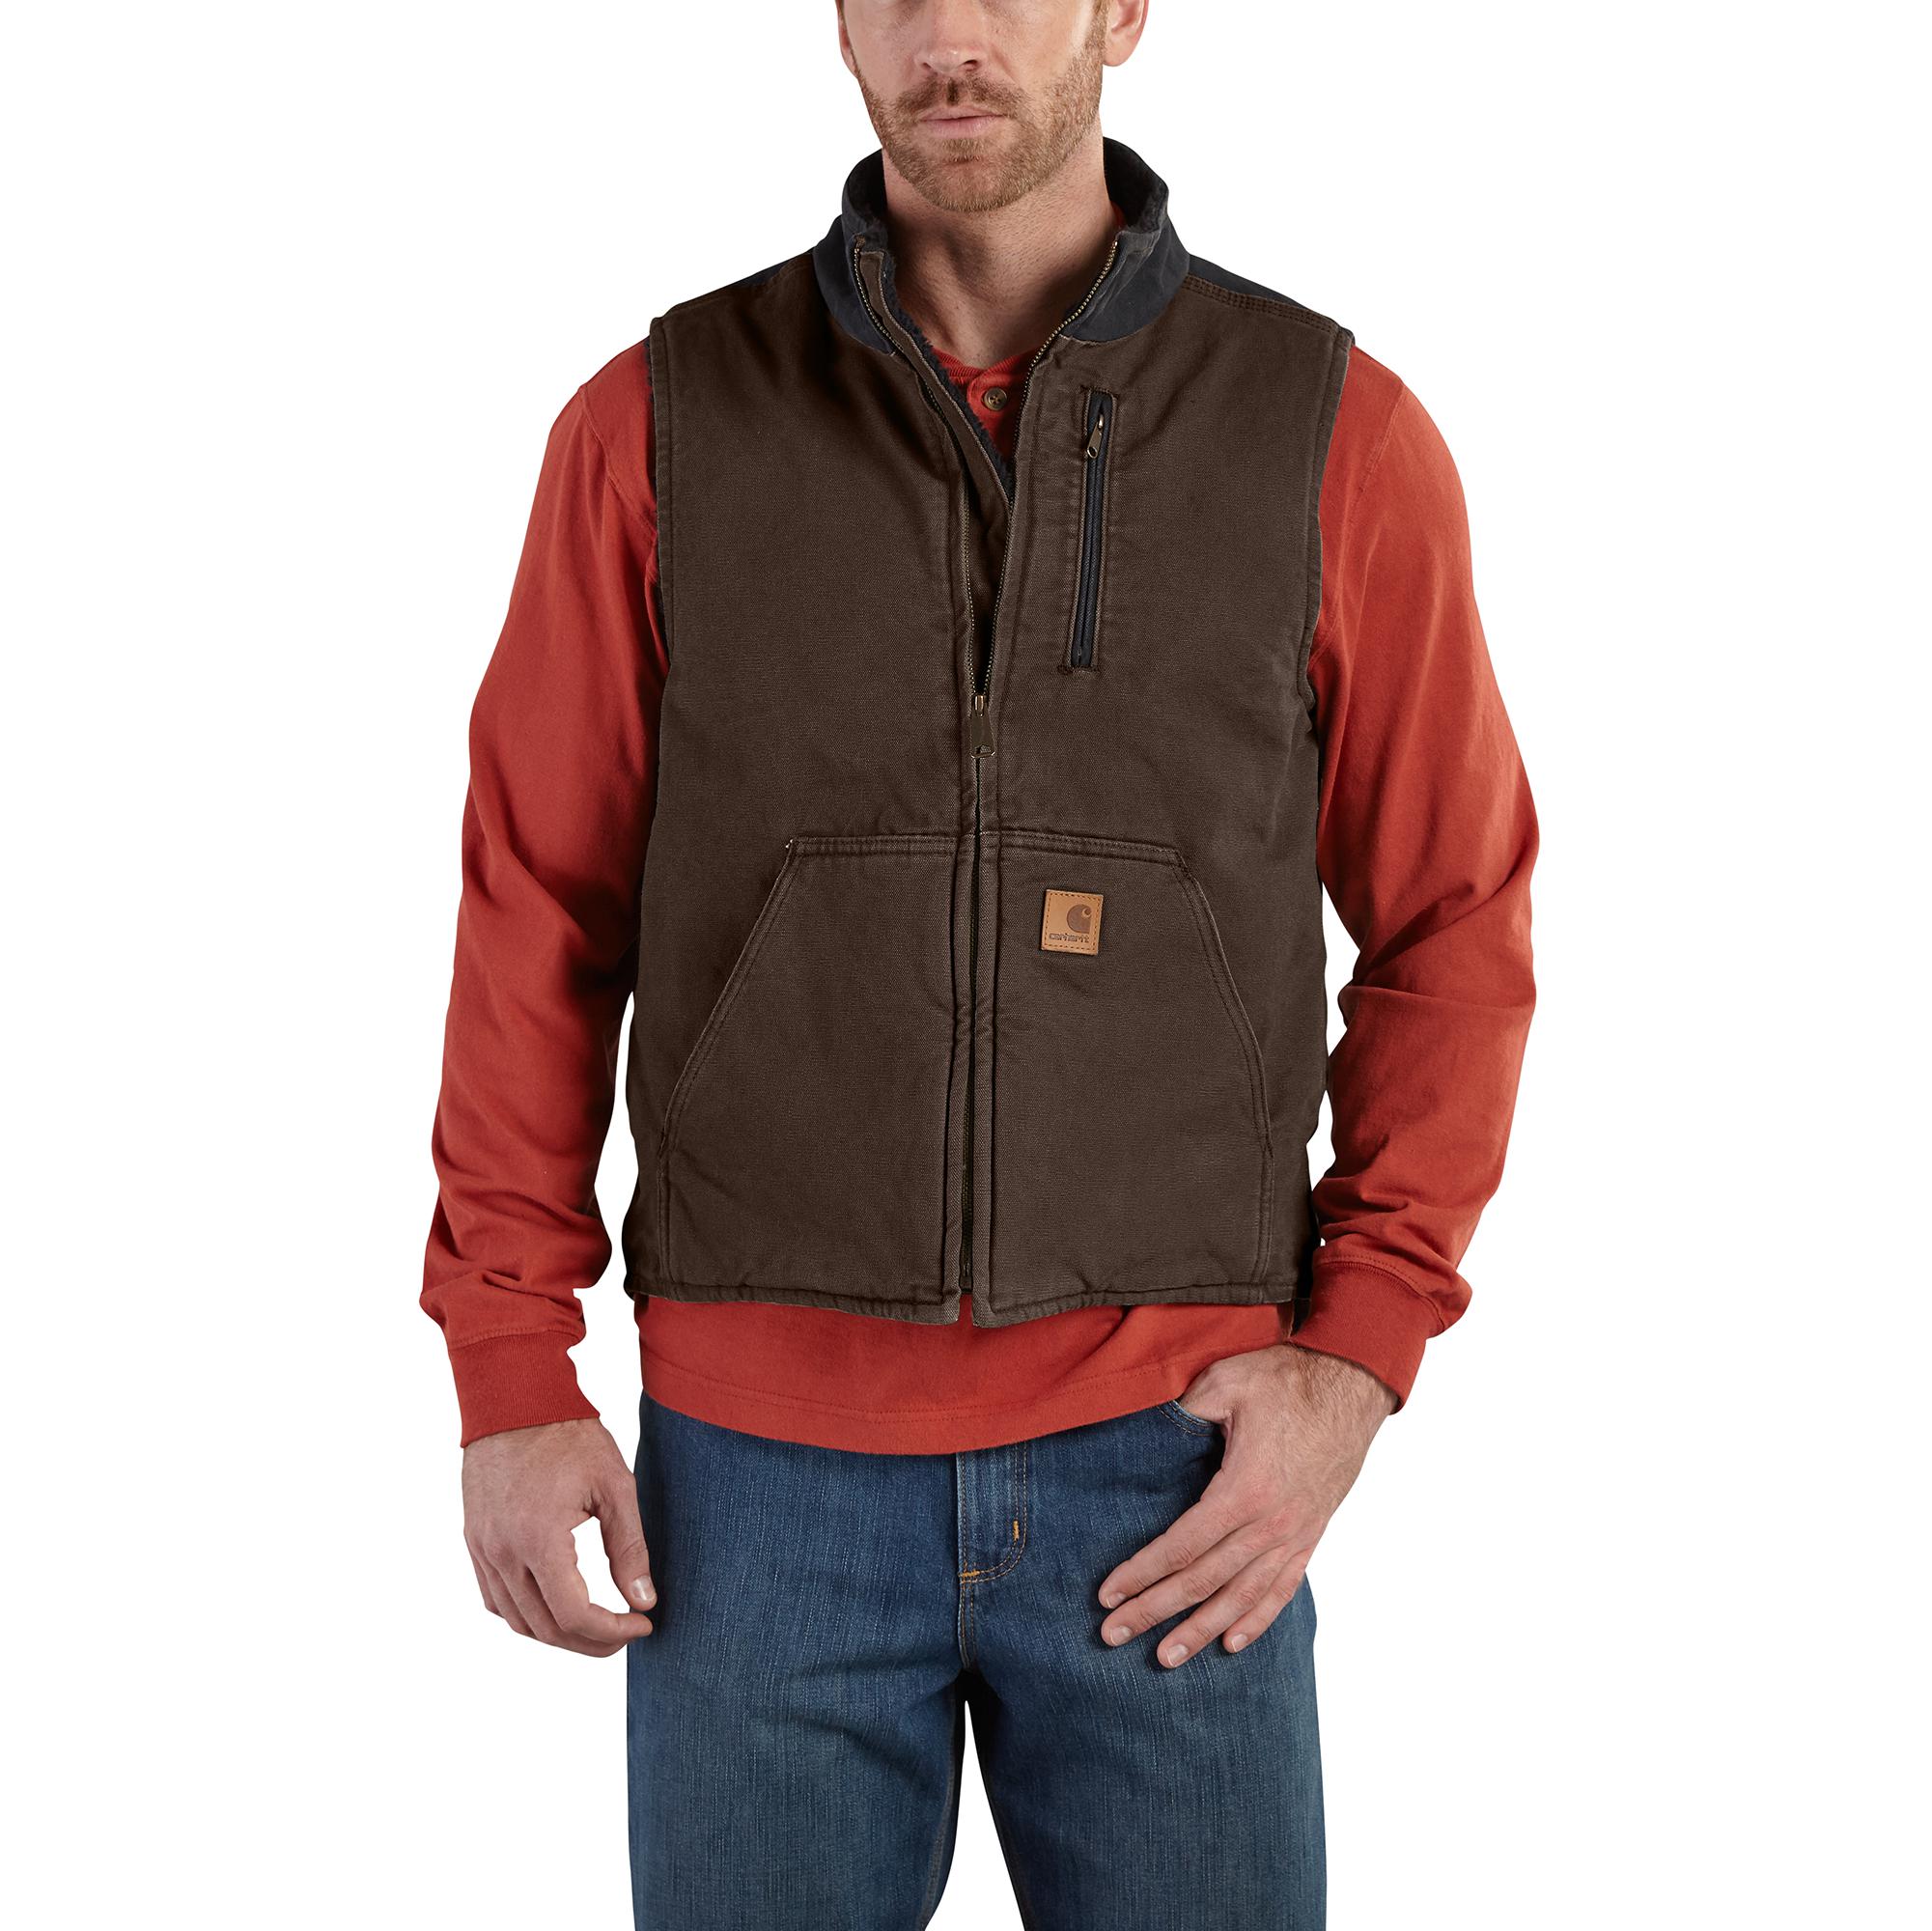 Boulder Gear' Men's Brooks Hybrid Jacket - Charcoal – Trav's Outfitter